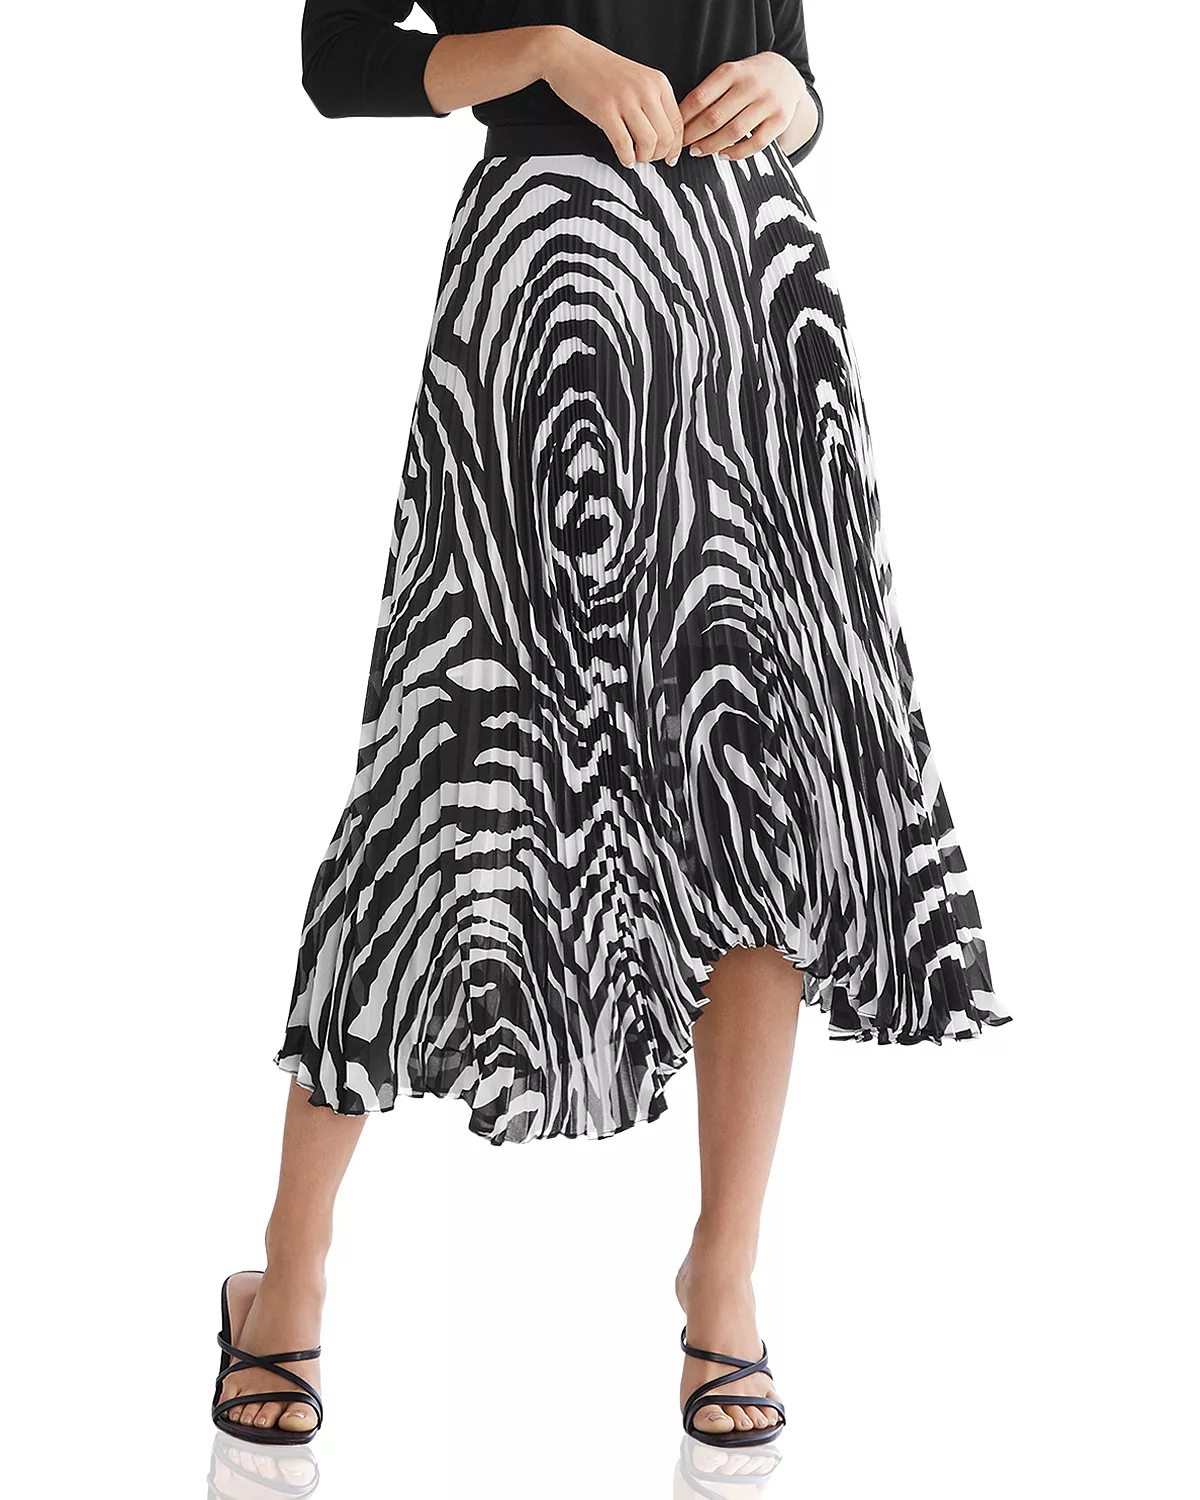 Zebra print pleated skirt